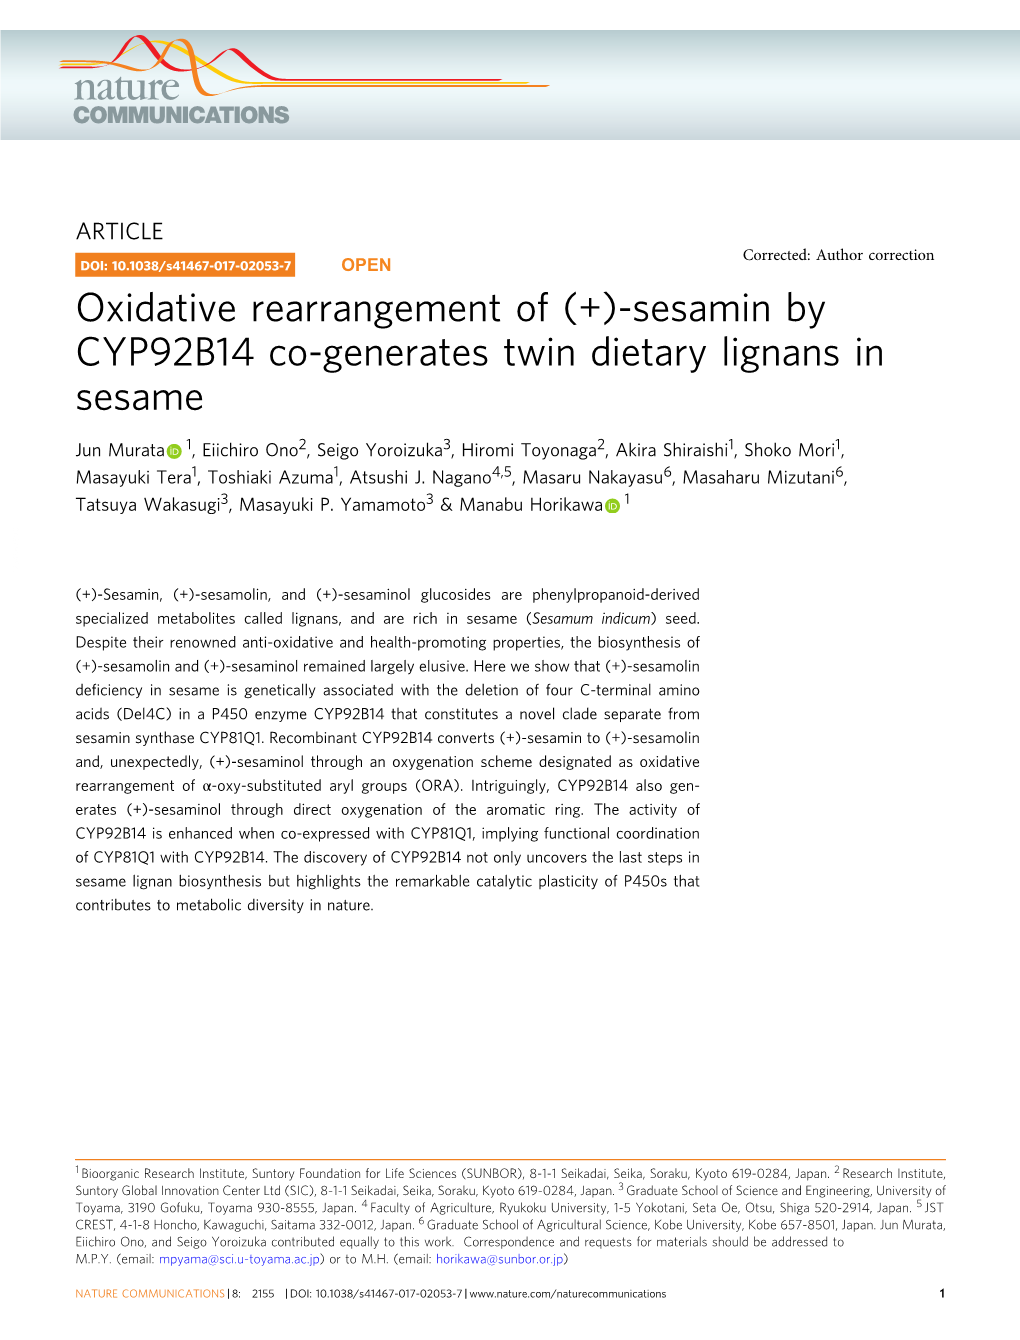 Oxidative Rearrangement of (+)-Sesamin by CYP92B14 Co-Generates Twin Dietary Lignans in Sesame